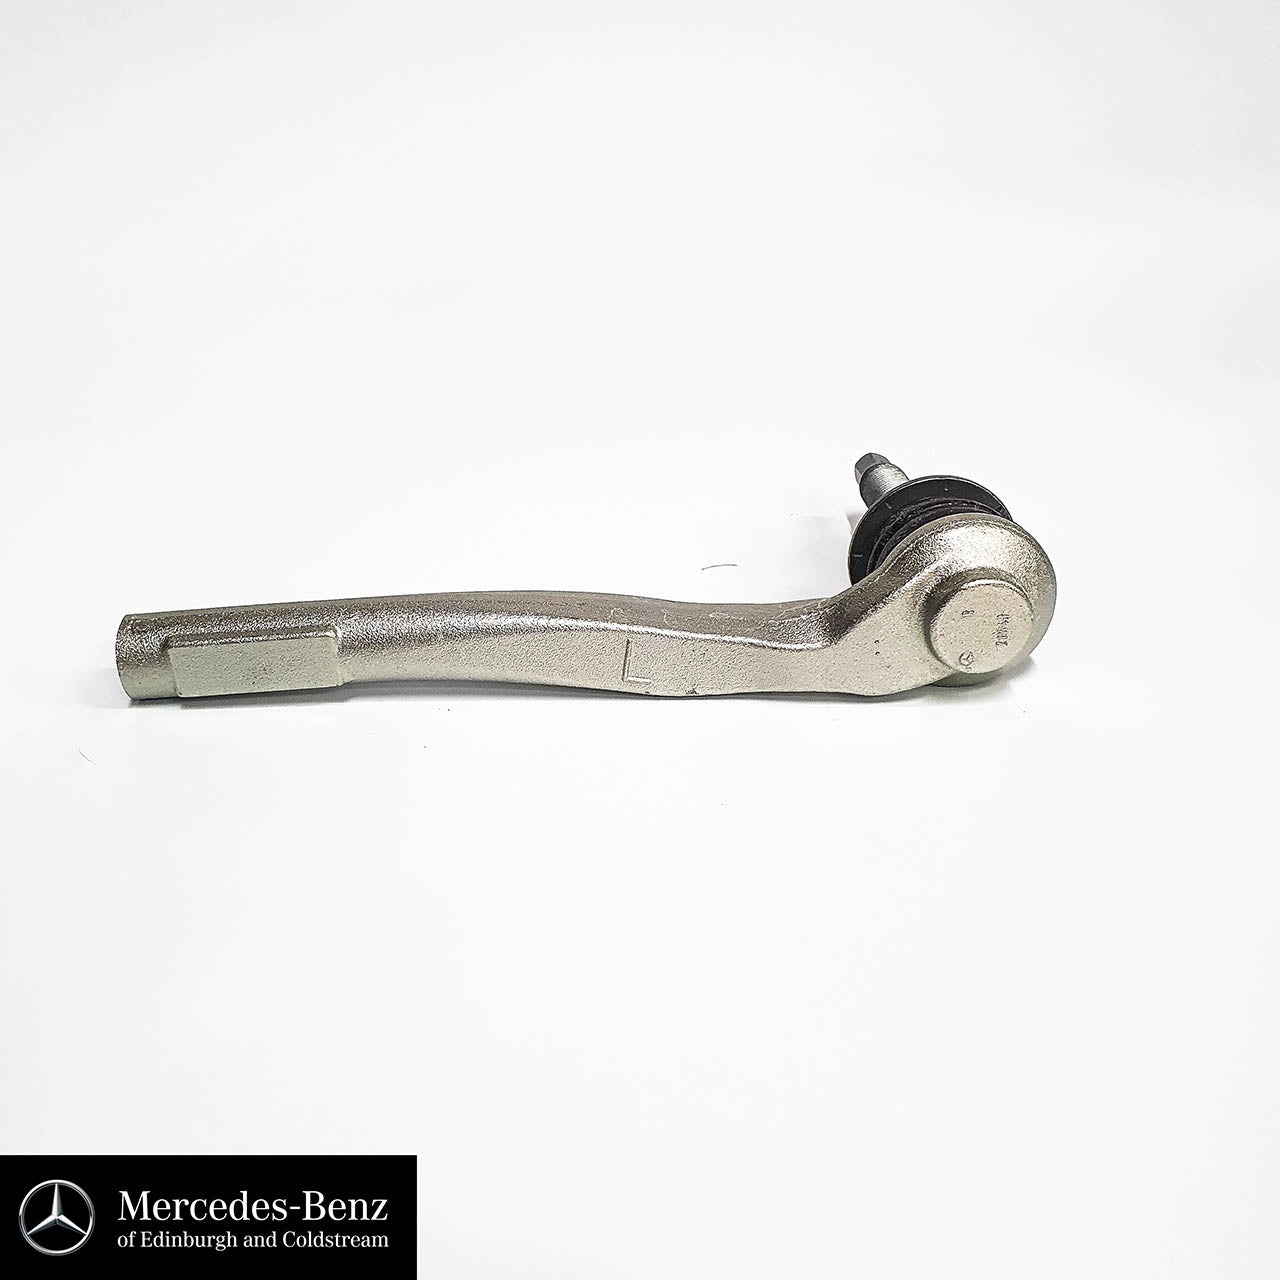 Genuine Mercedes-Benz tie rod end for C Class, E Class, CLS